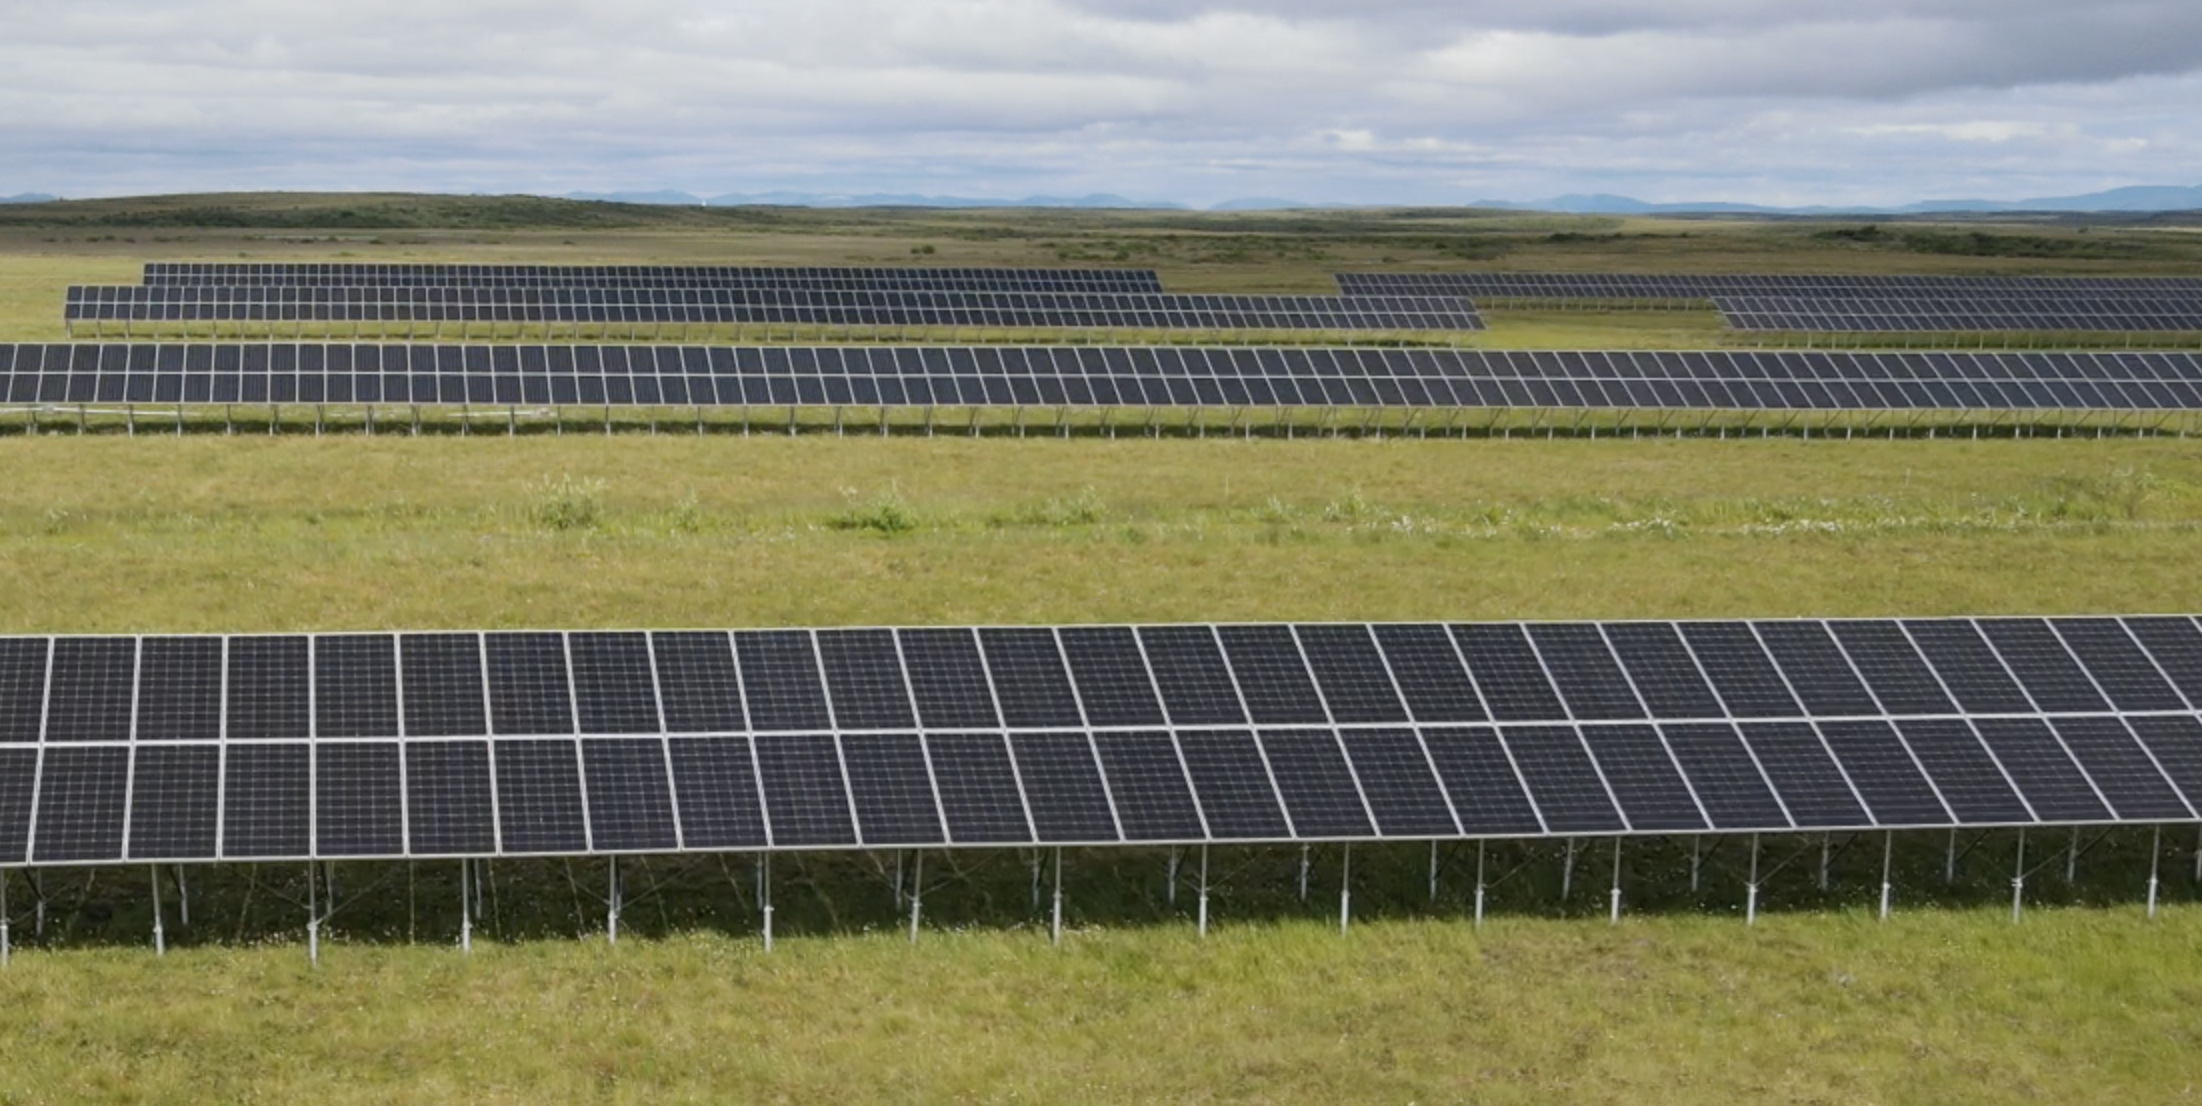 Solar panels in Kotzebue, Alaska